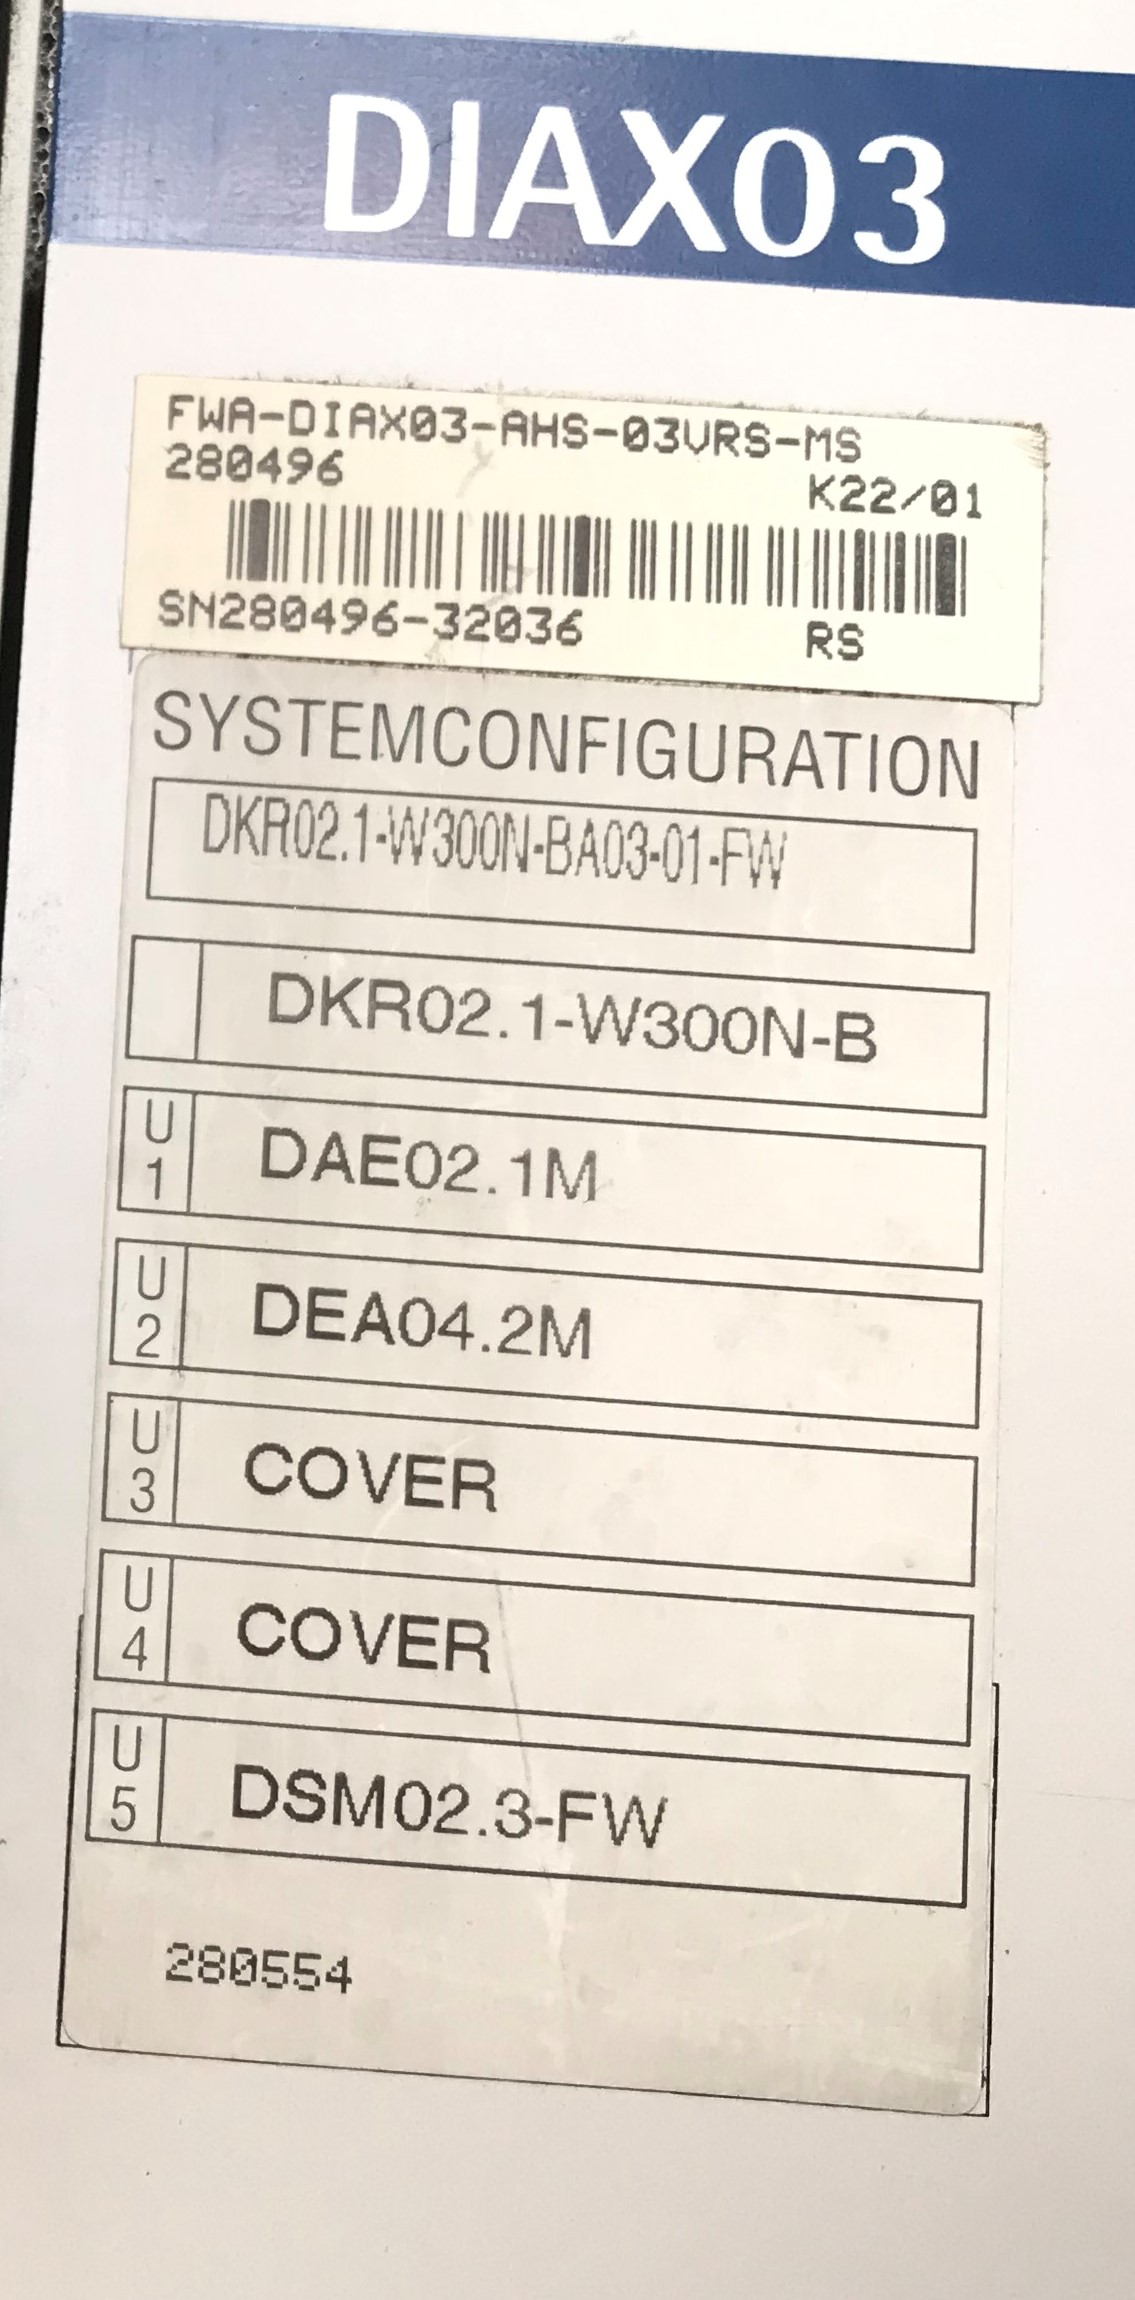 Indramat DIAX03 AC-Controller DKR02.1-W300N-BA03-01-FW